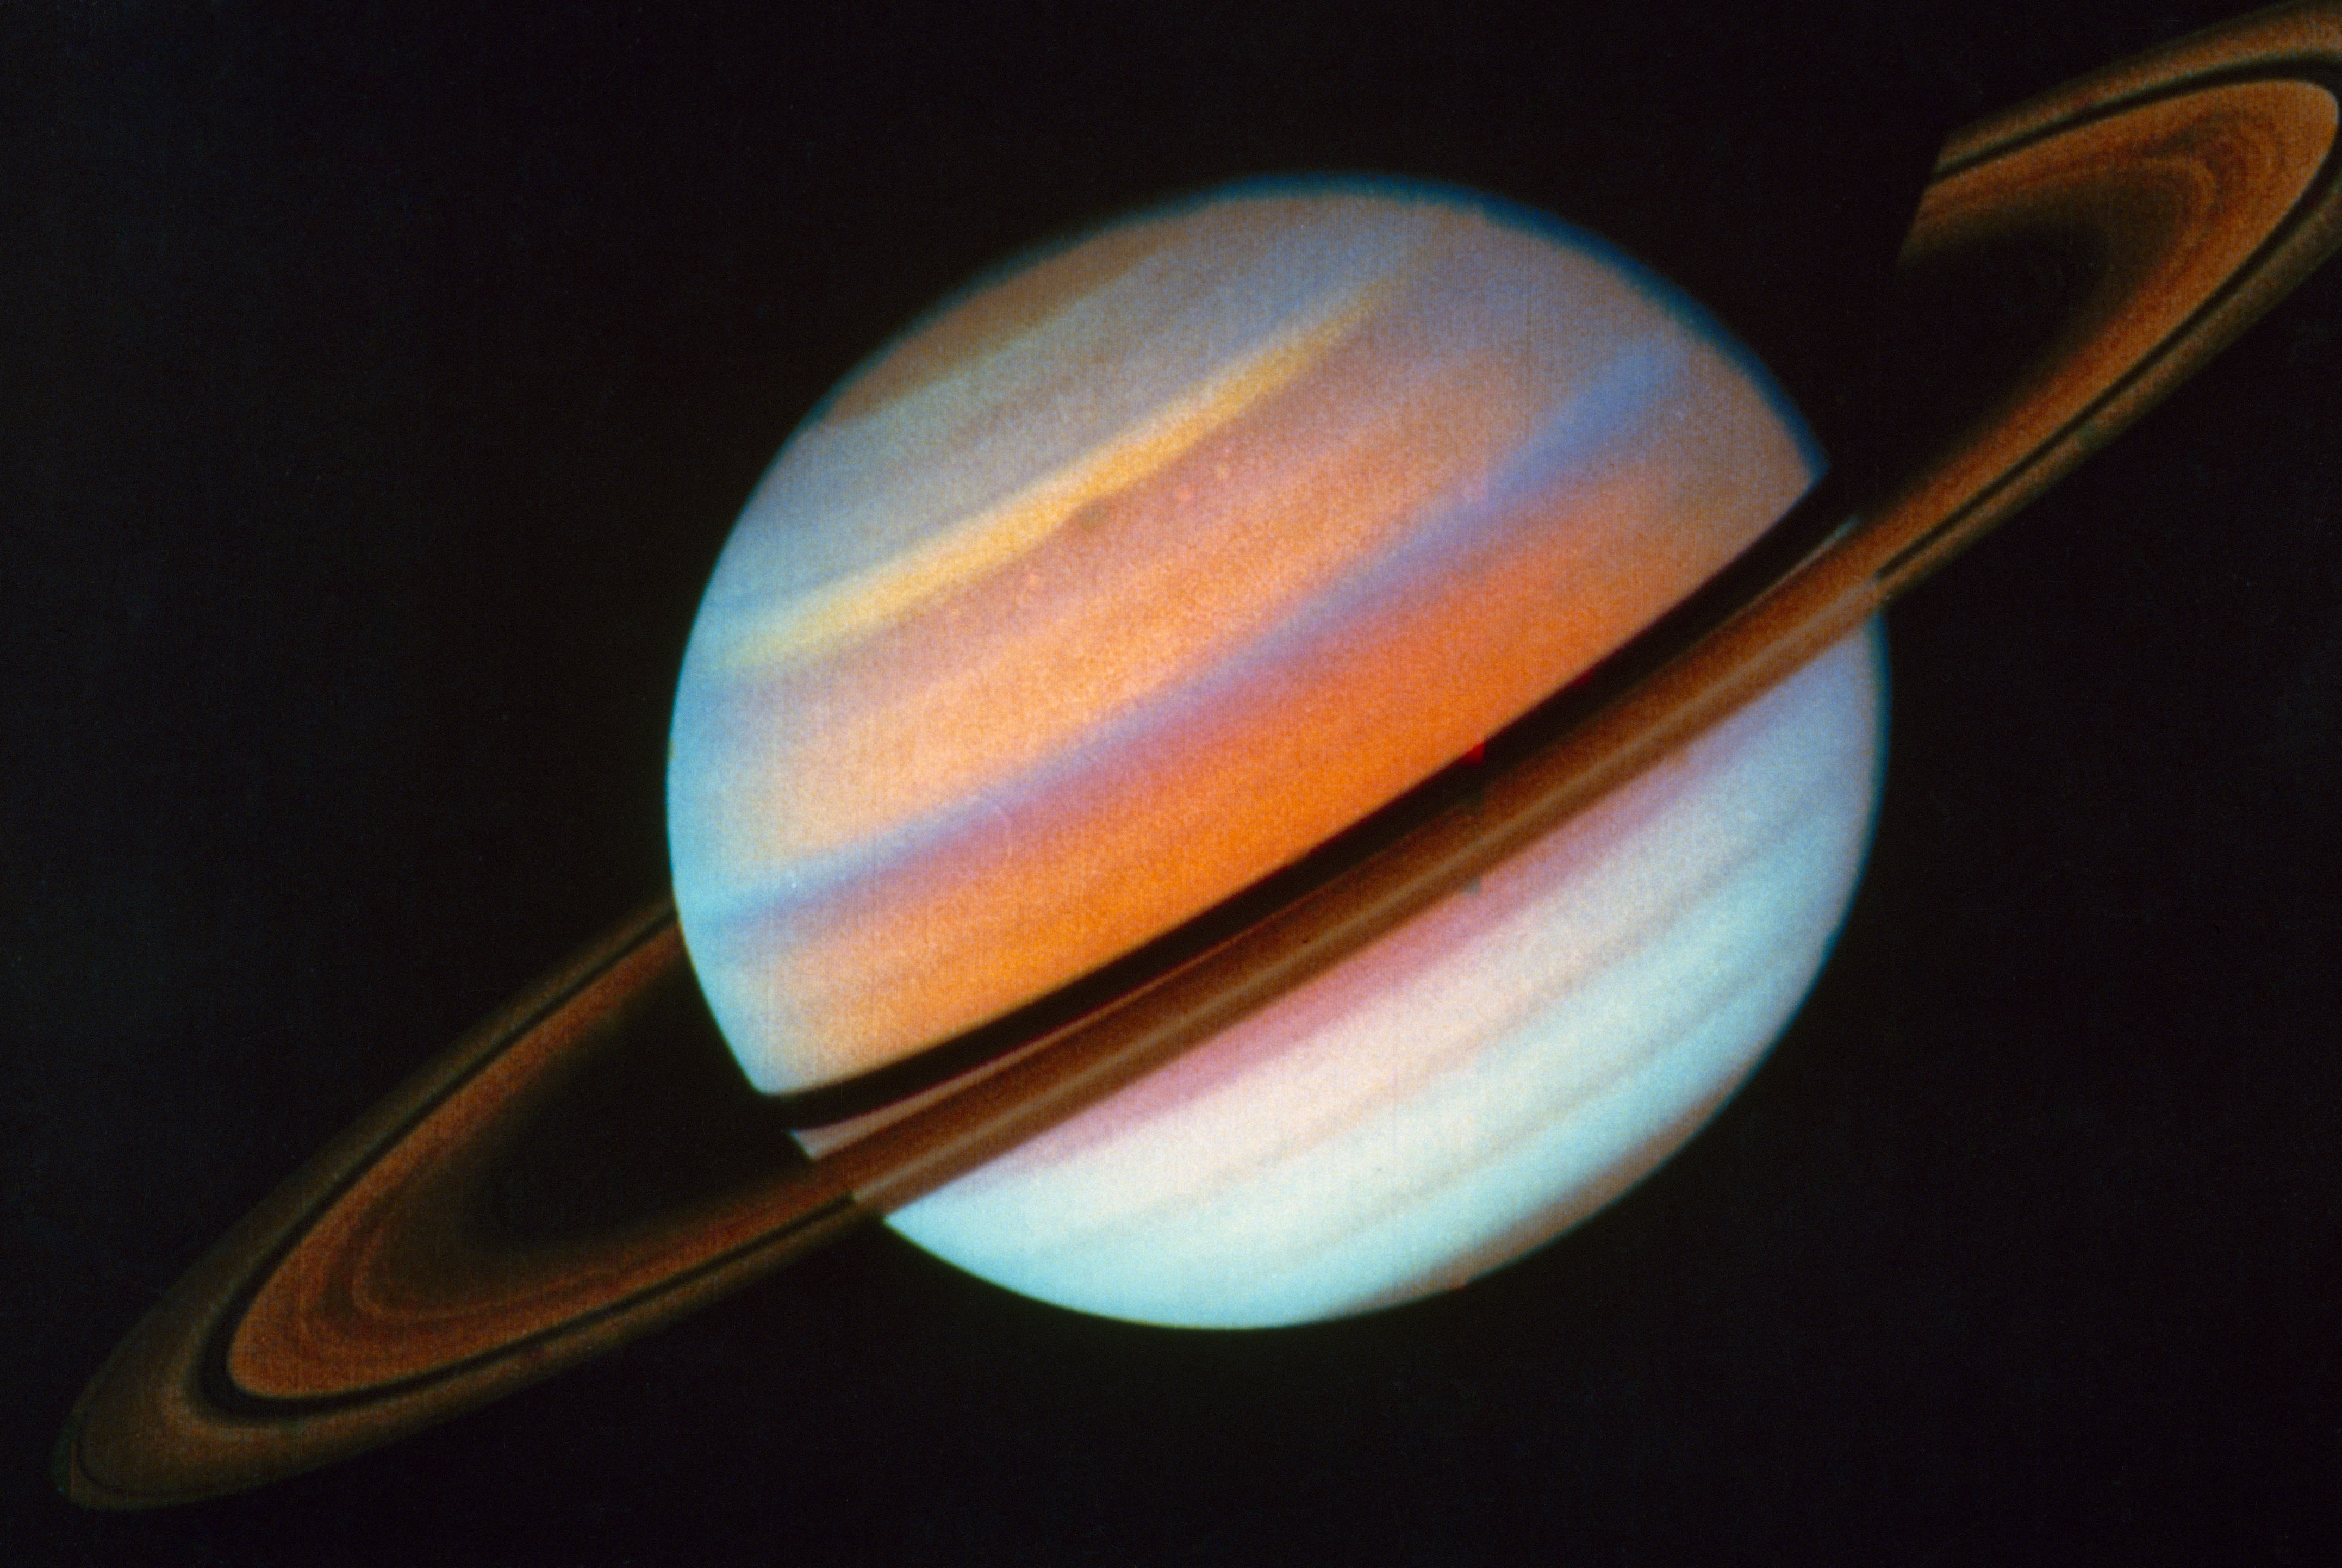 Saturn photo